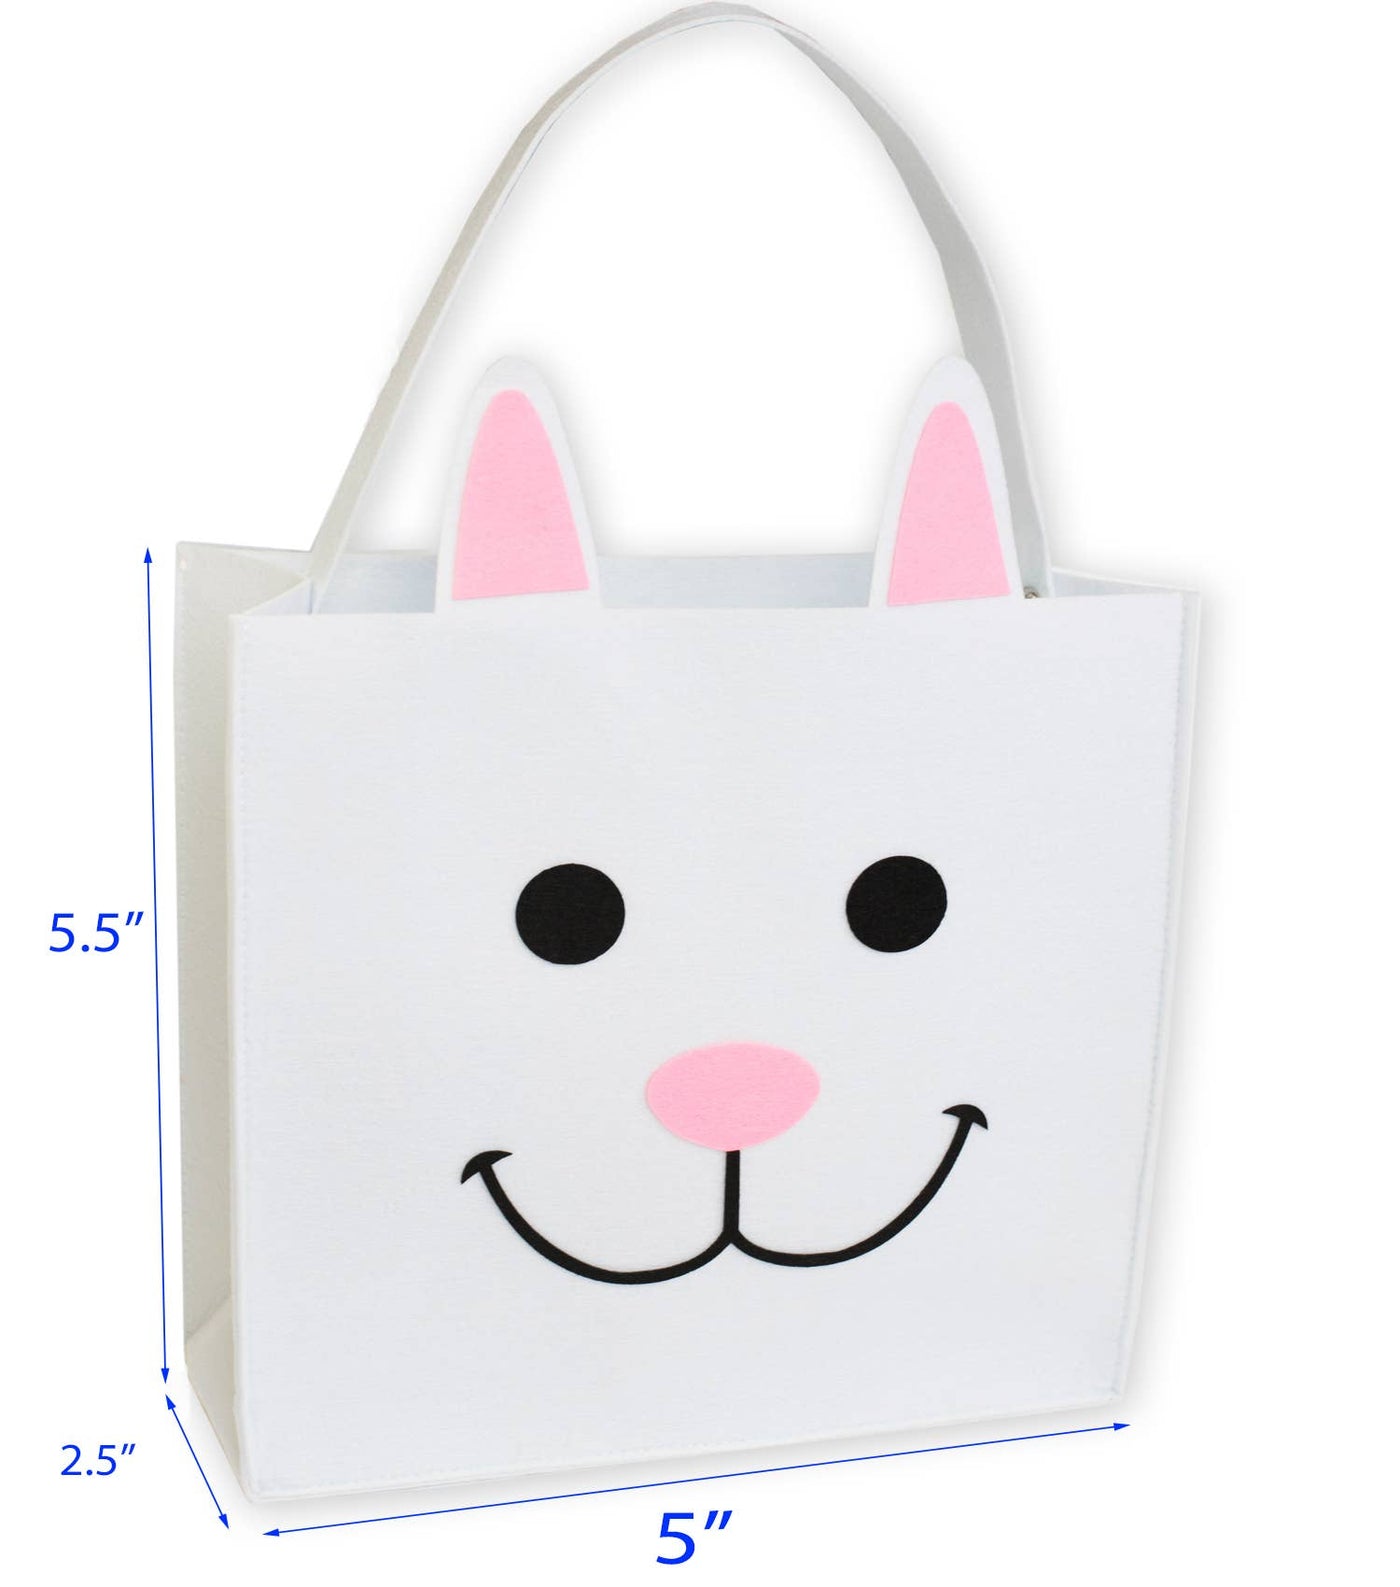 Small Easter bunny Felt bag/ tote 5"